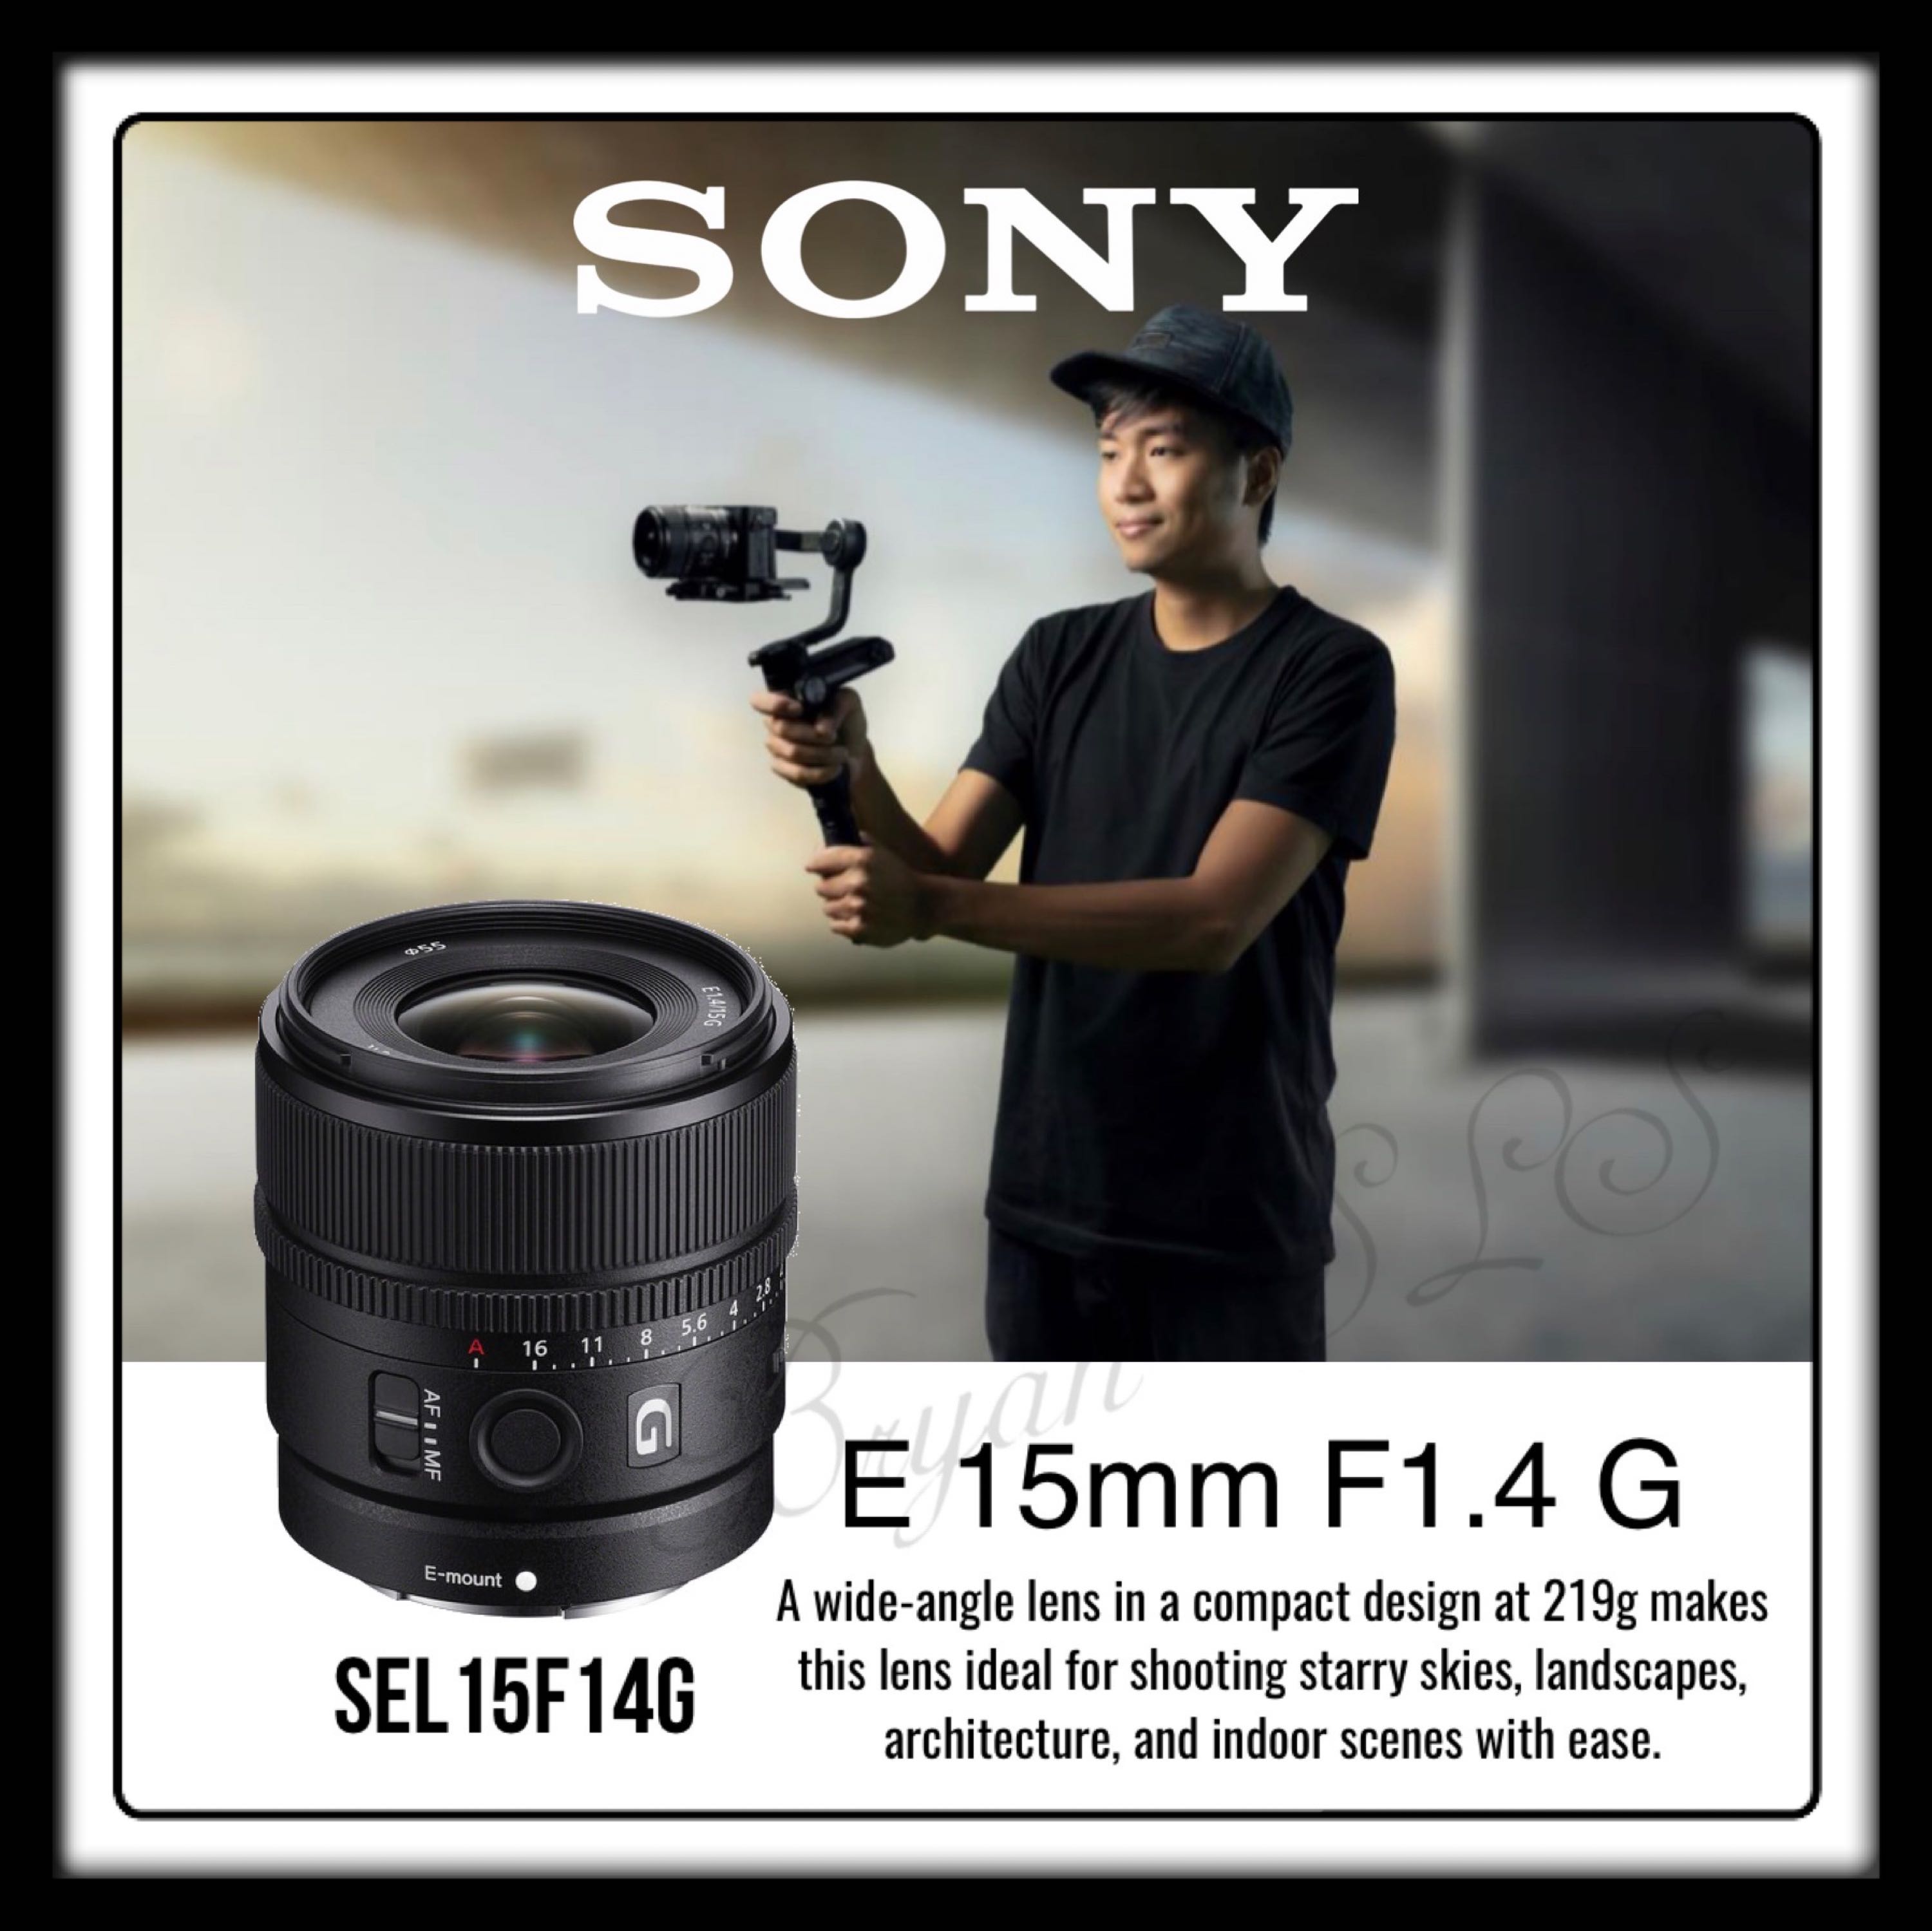 SONY 15mm F1.4G / SEL15F14G / E15mm F1.4G , Photography ...